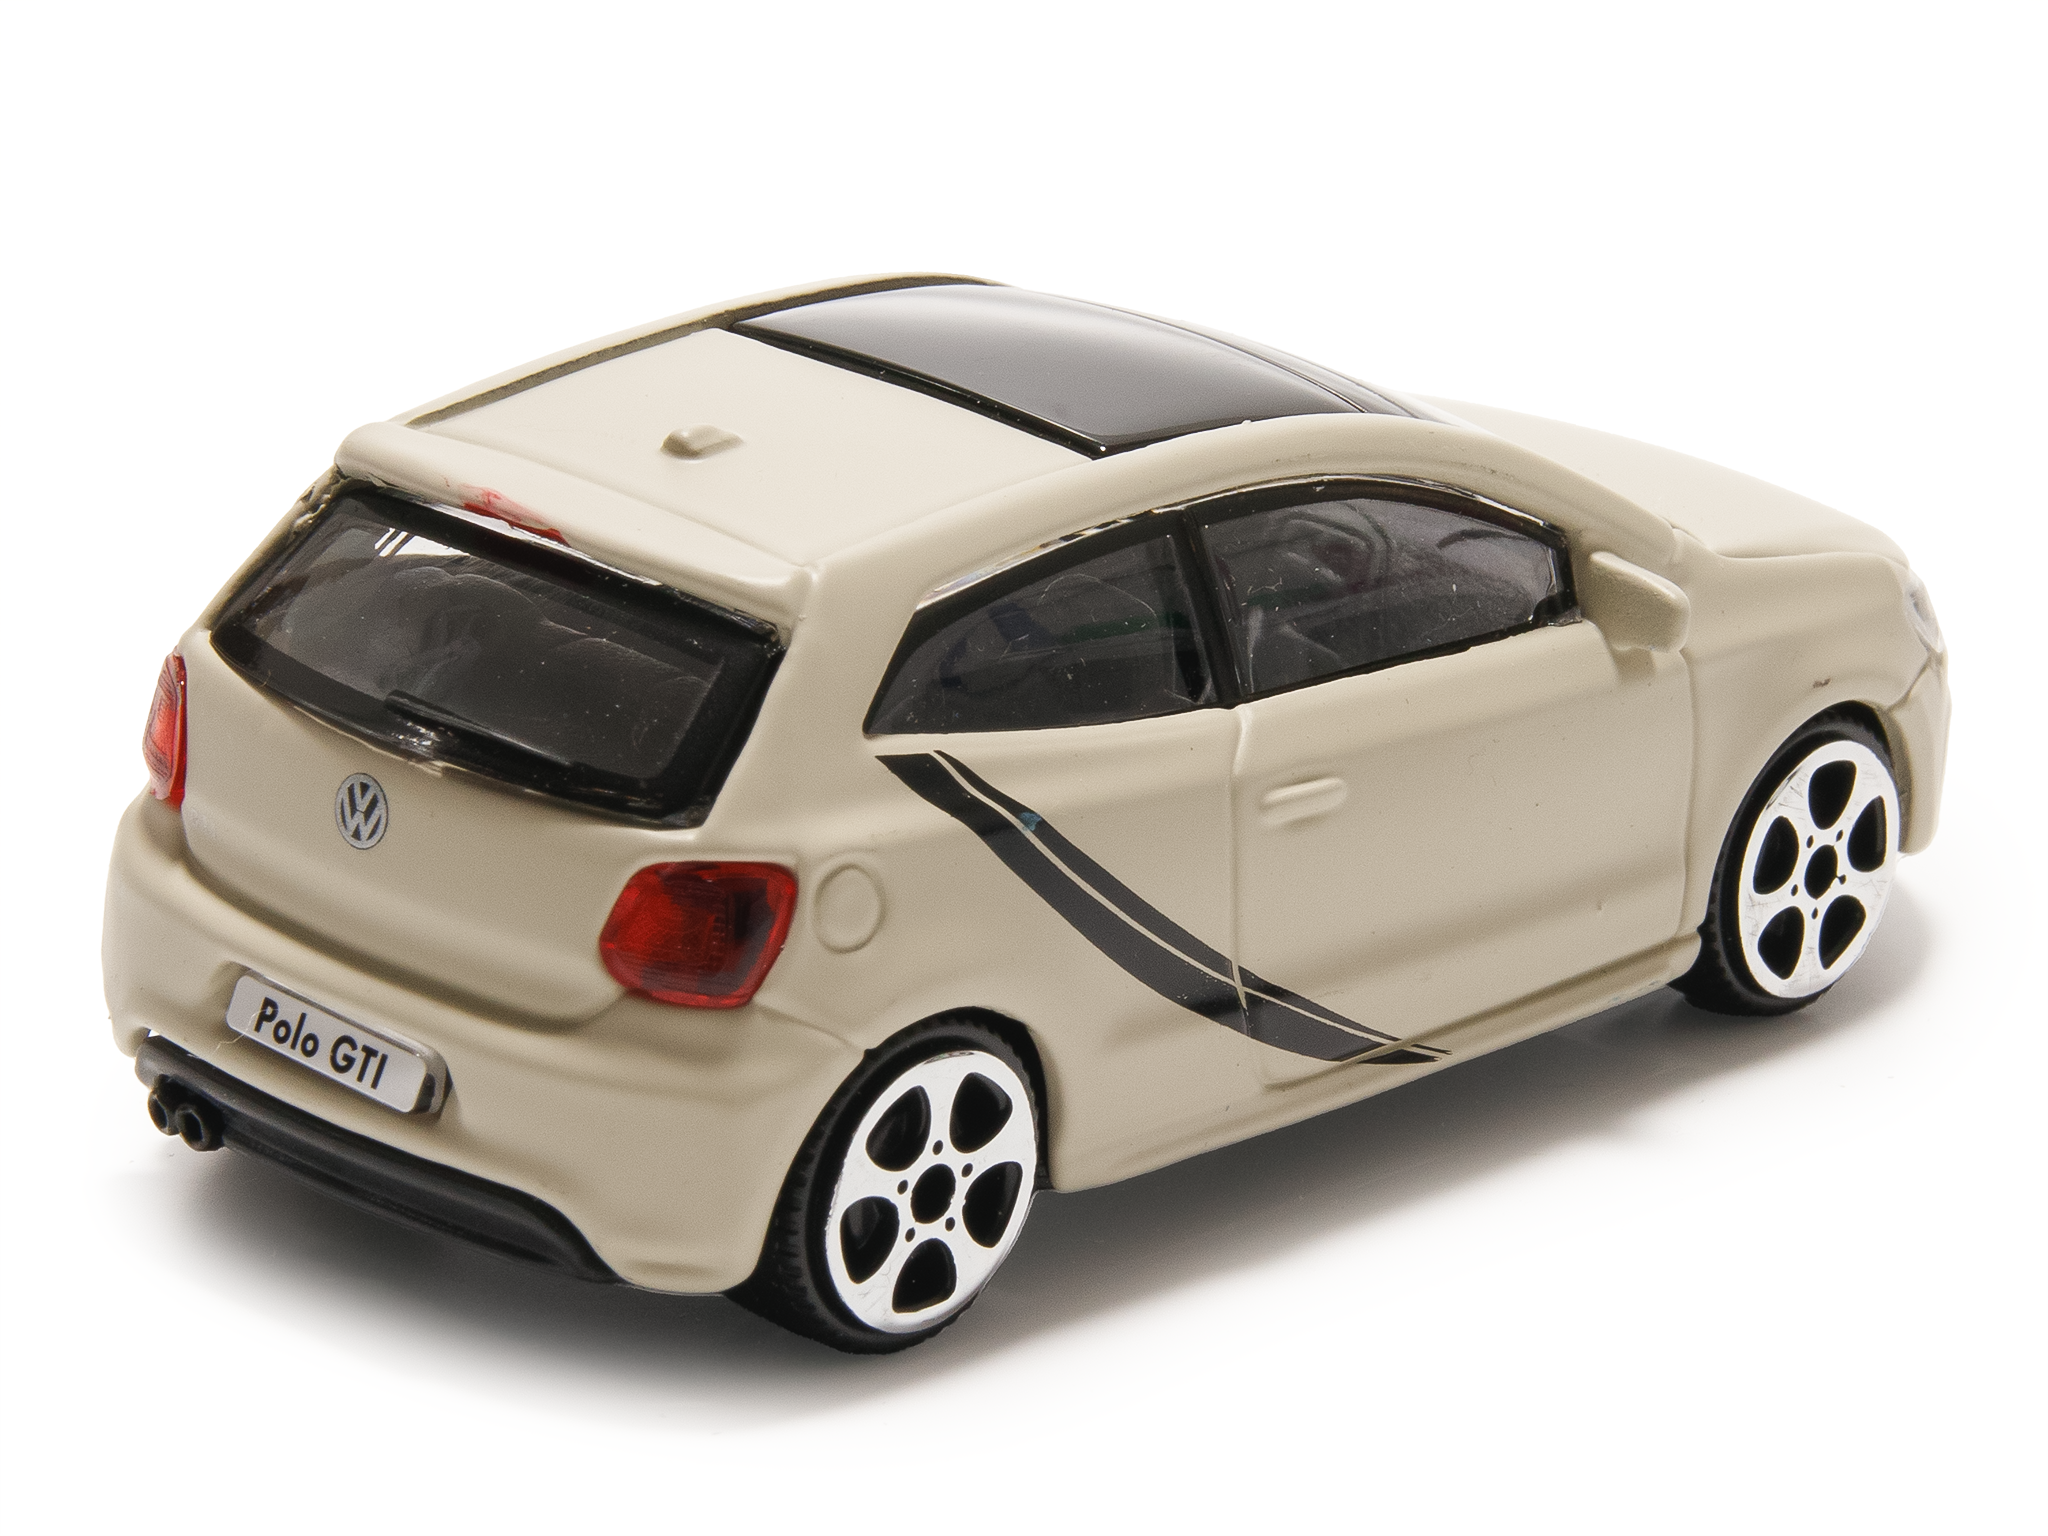 Volkswagen Polo Mk5 GTi cream - 1:43 Scale Diecast Toy Car